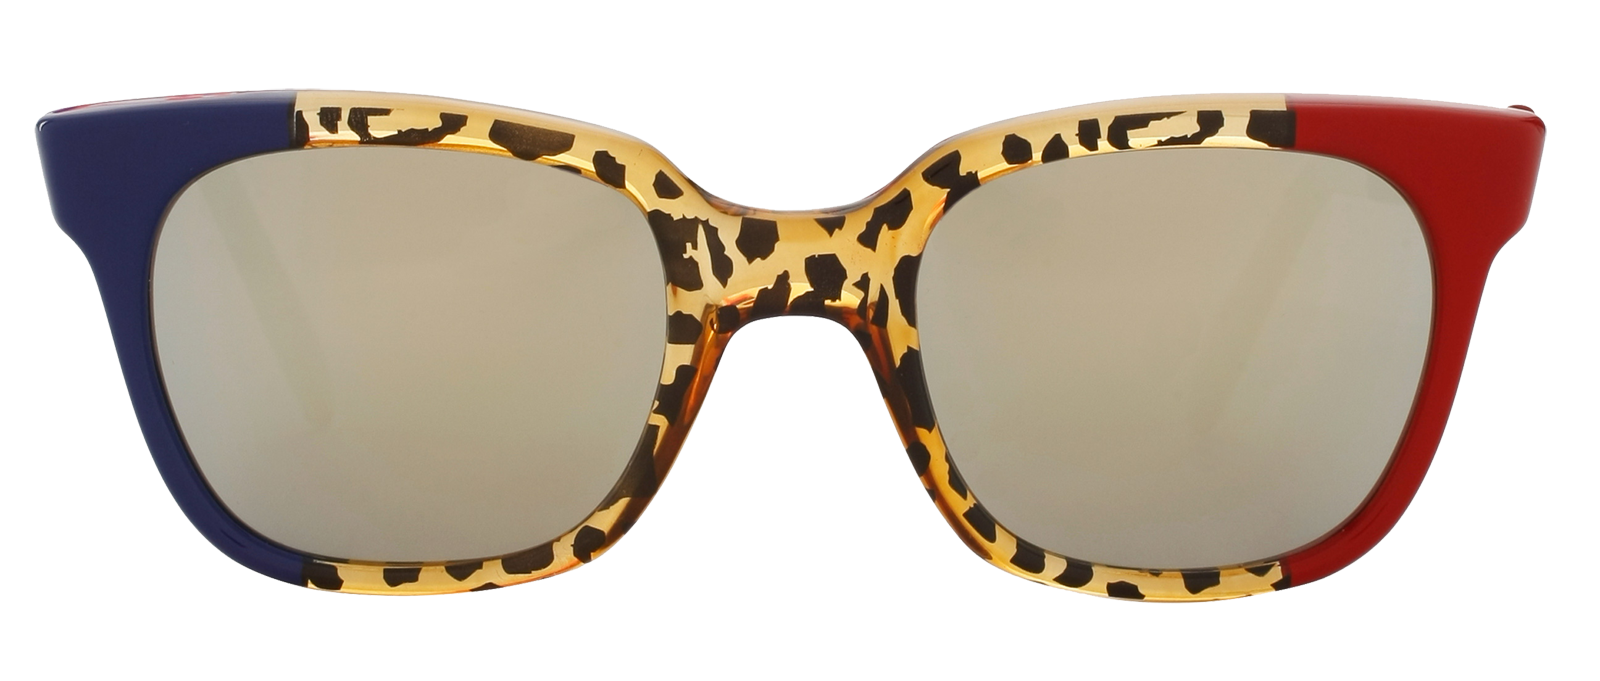 SHERIFF AND CHERRY Acetate WayFarer Sunglasses leopard print red navy